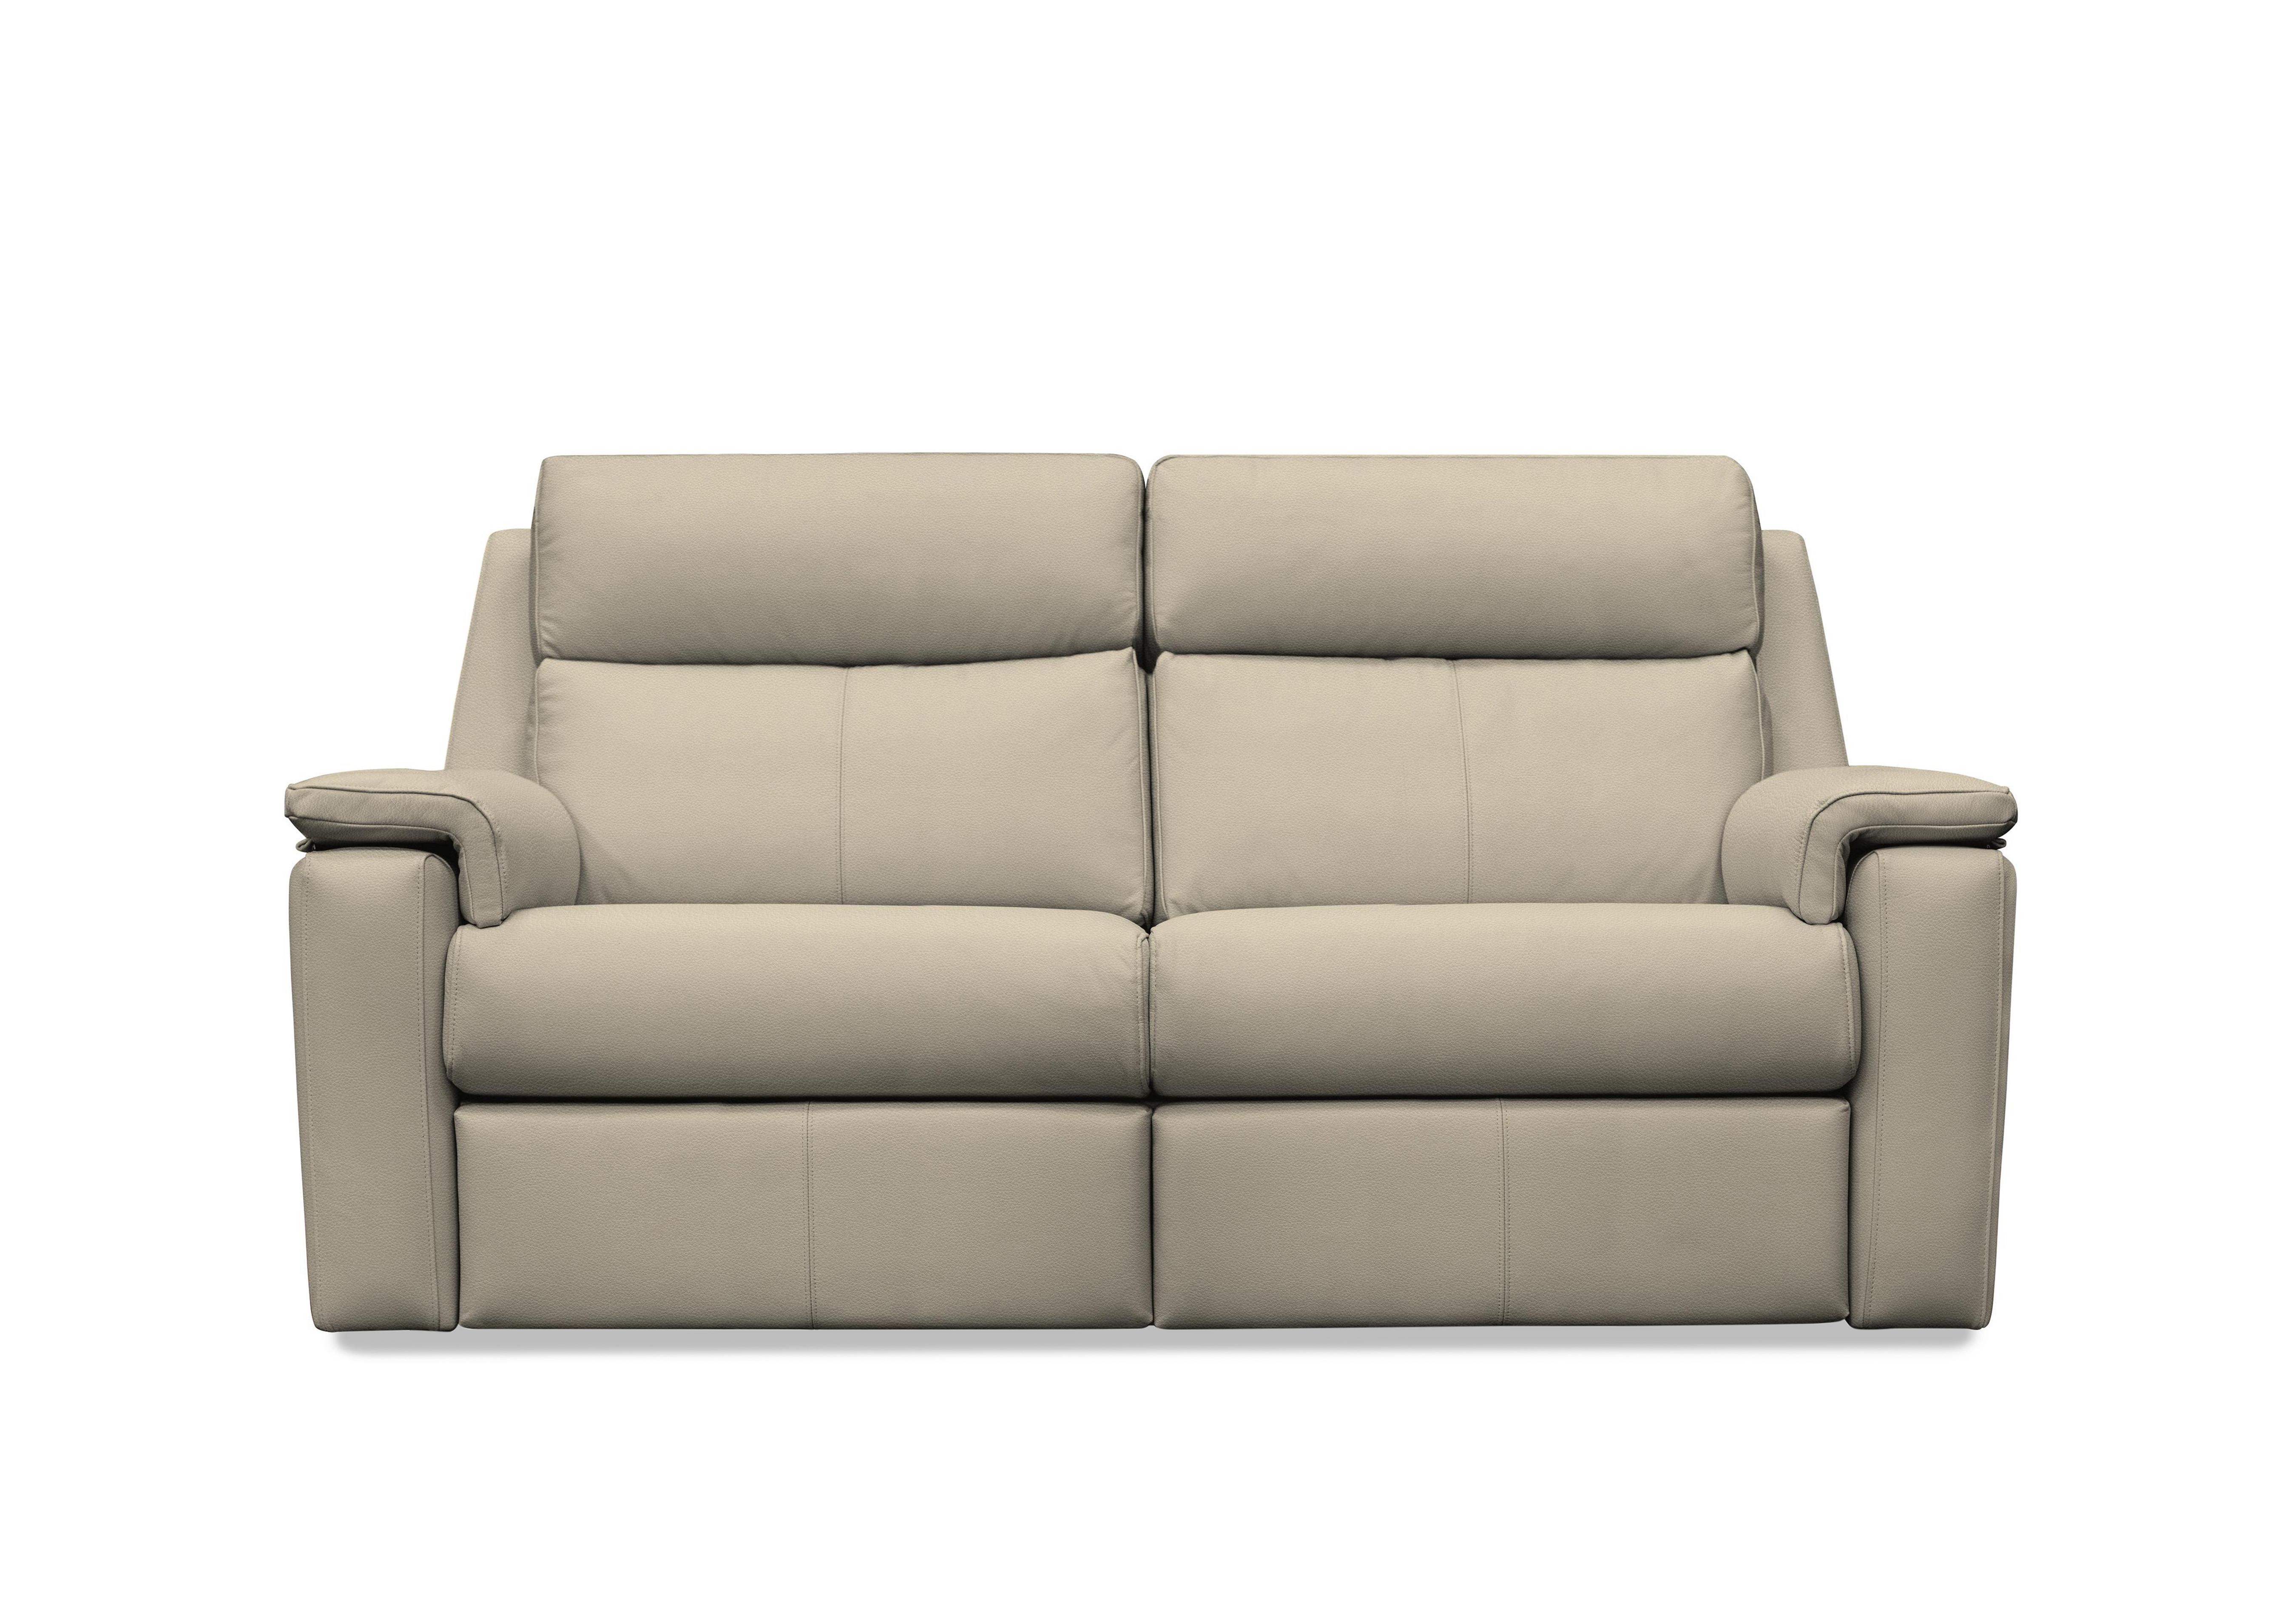 Thornbury 3 Seater Leather Sofa in H001 Oxford Mushroom on Furniture Village